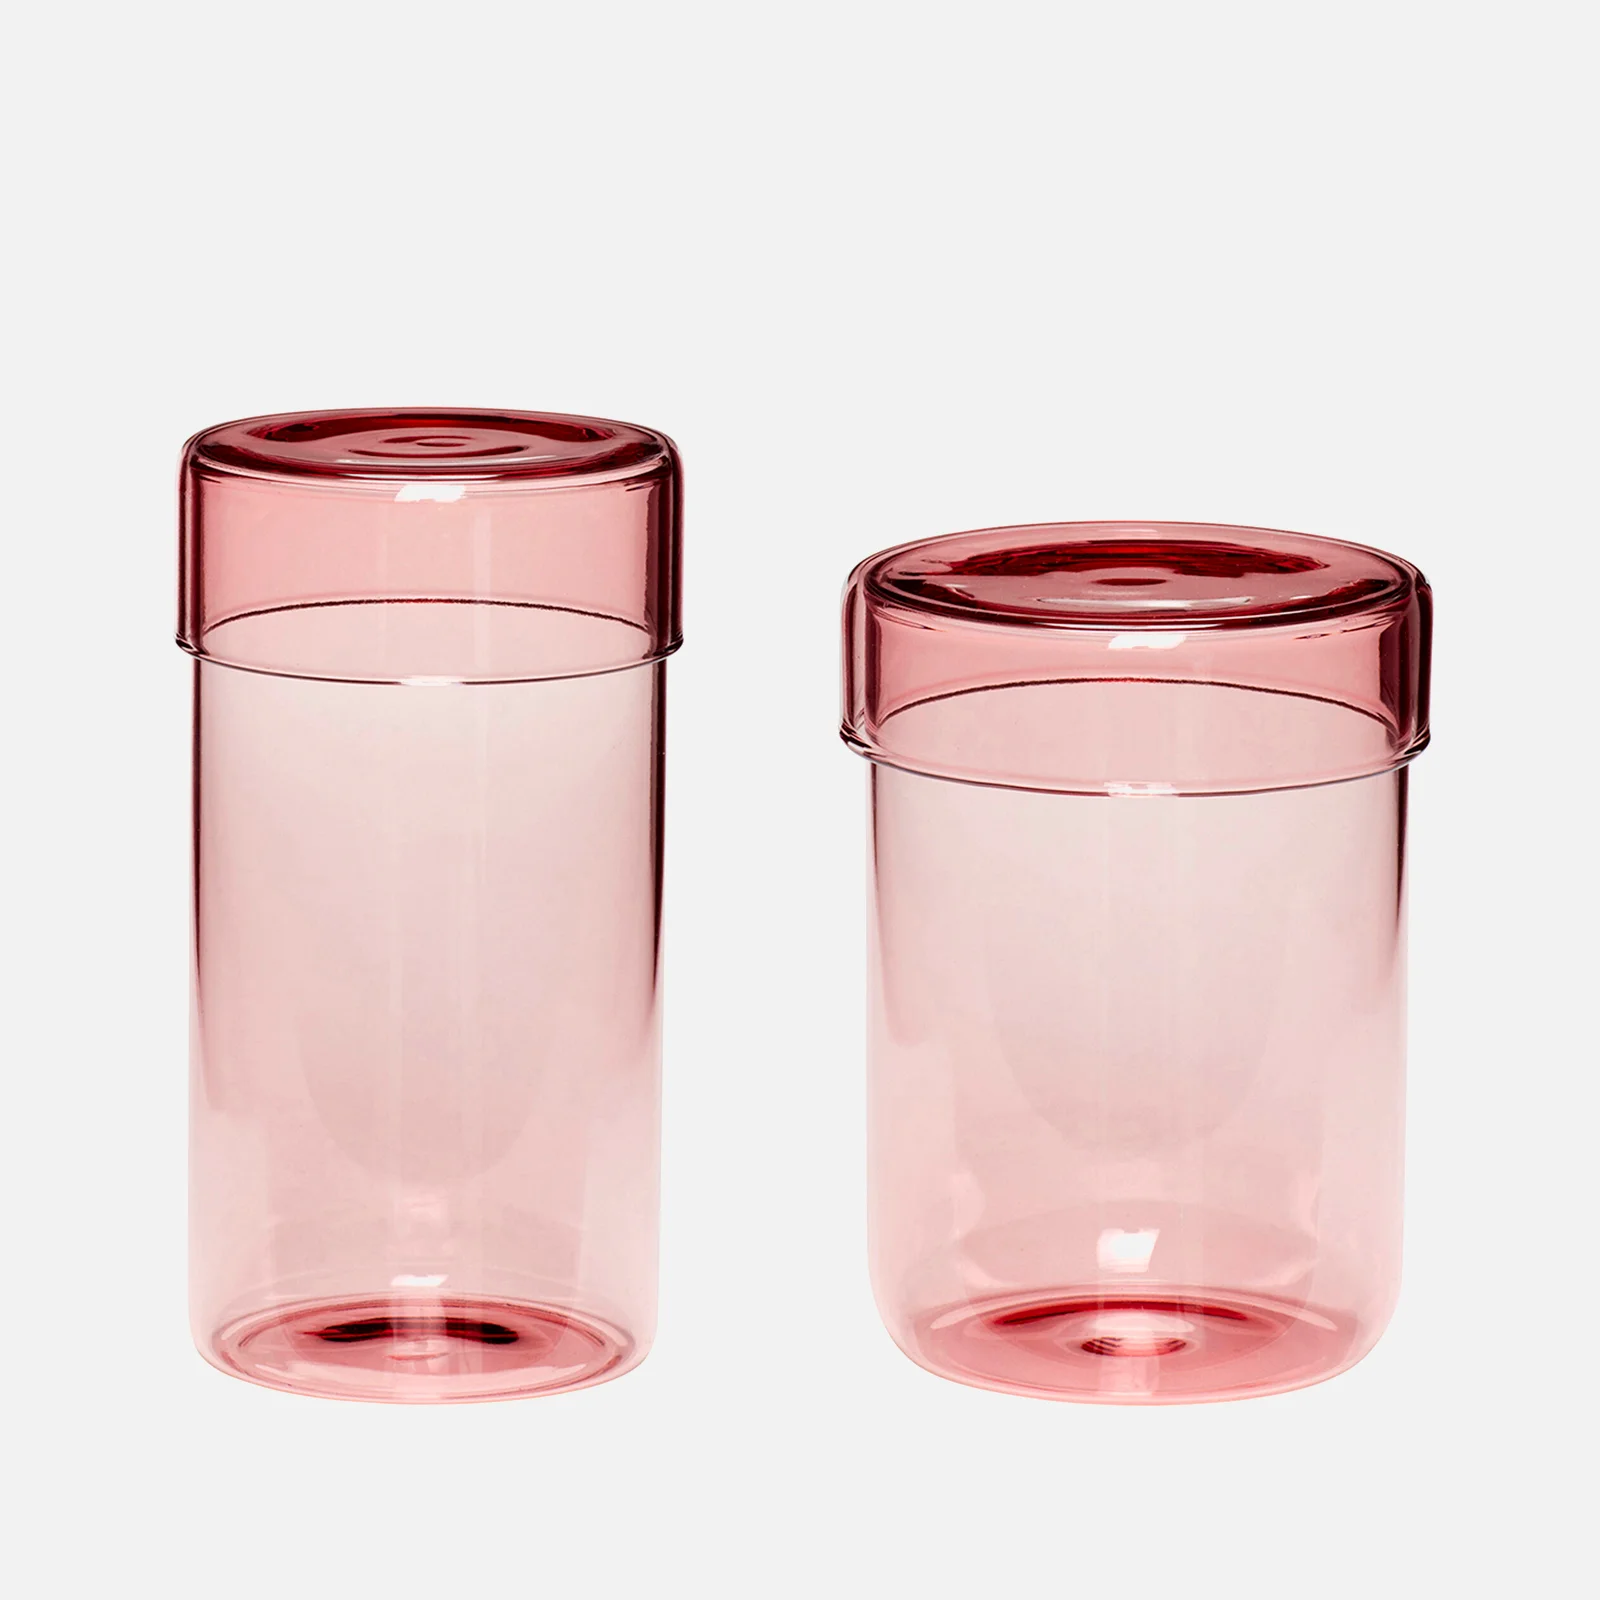 Hübsch Pop Storage Jars - Pink - Large (Set of 2) Image 1